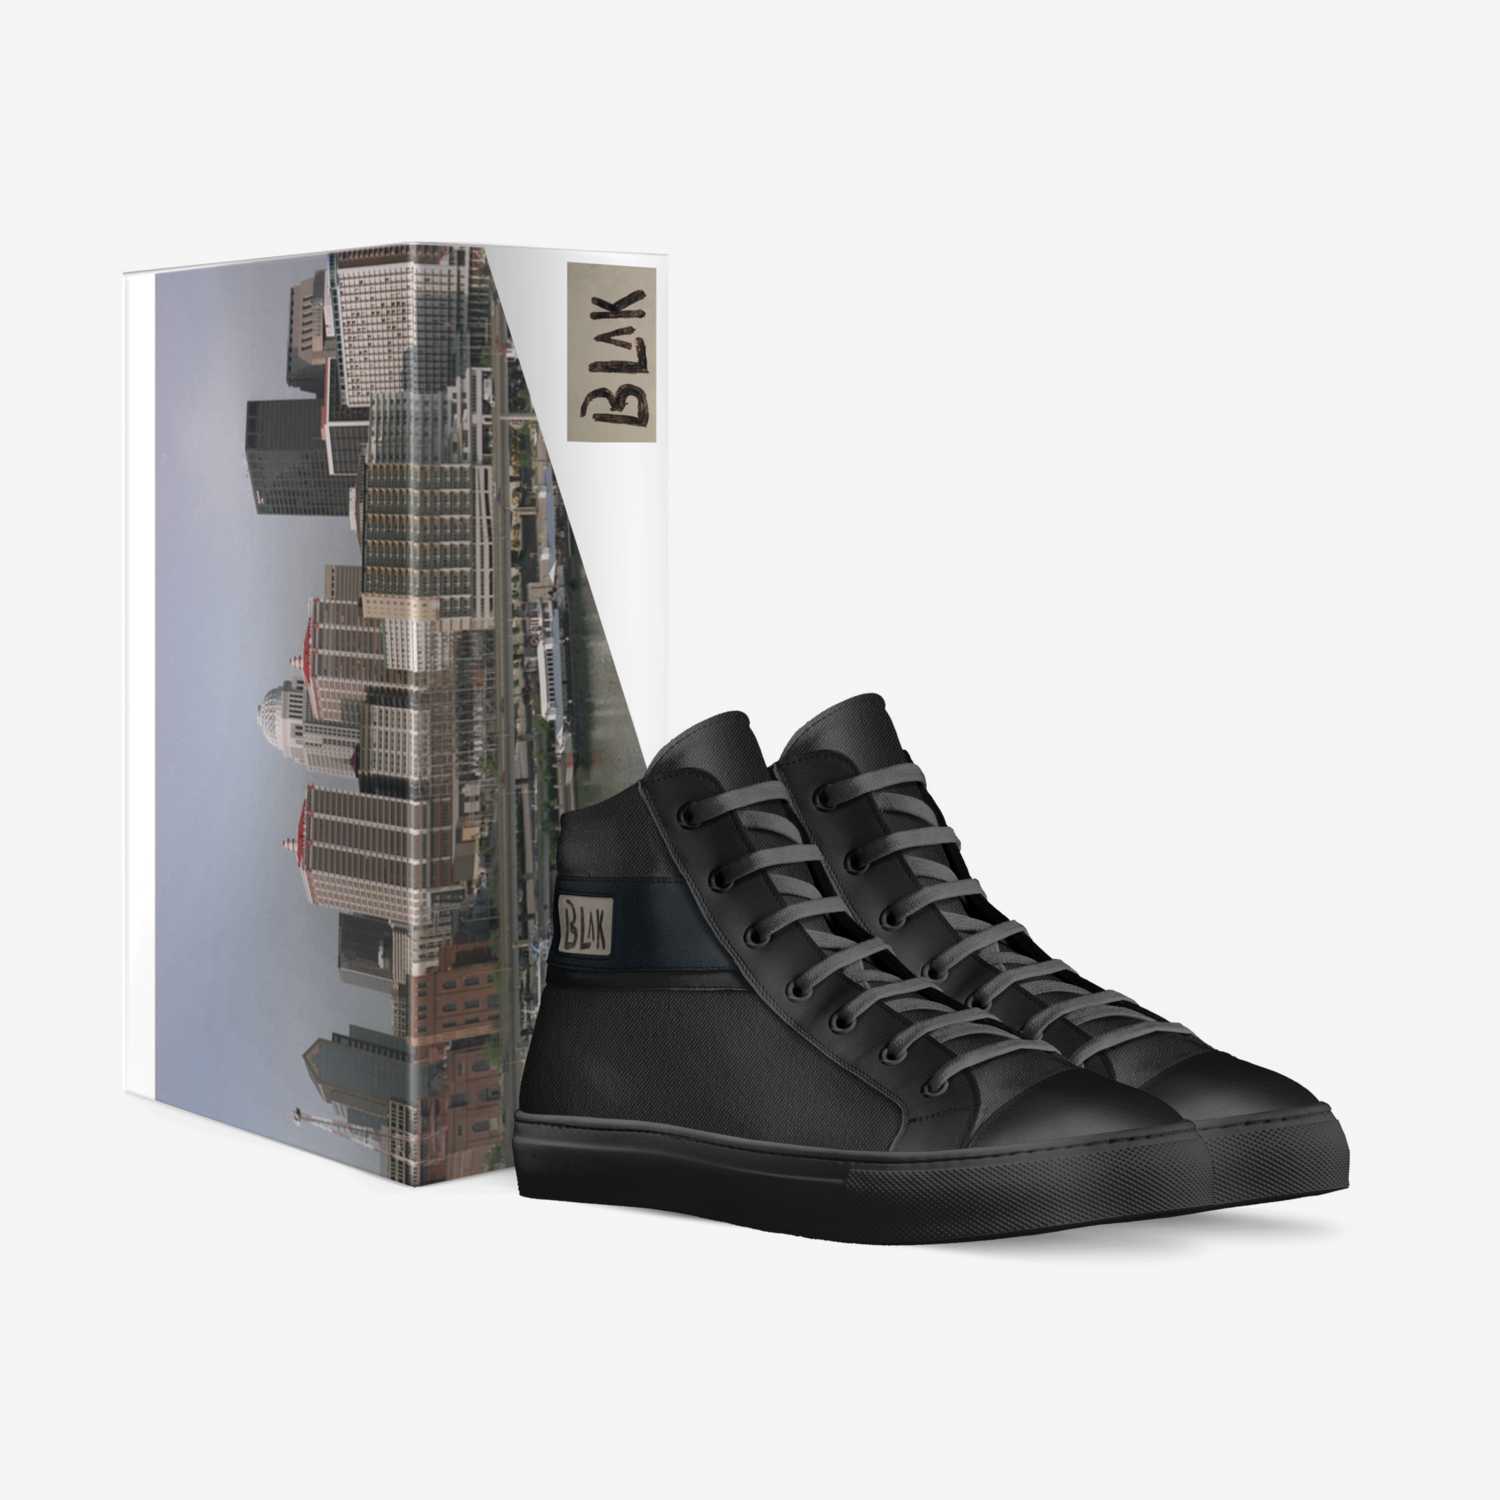 Blak custom made in Italy shoes by Jax Rhapsody | Box view